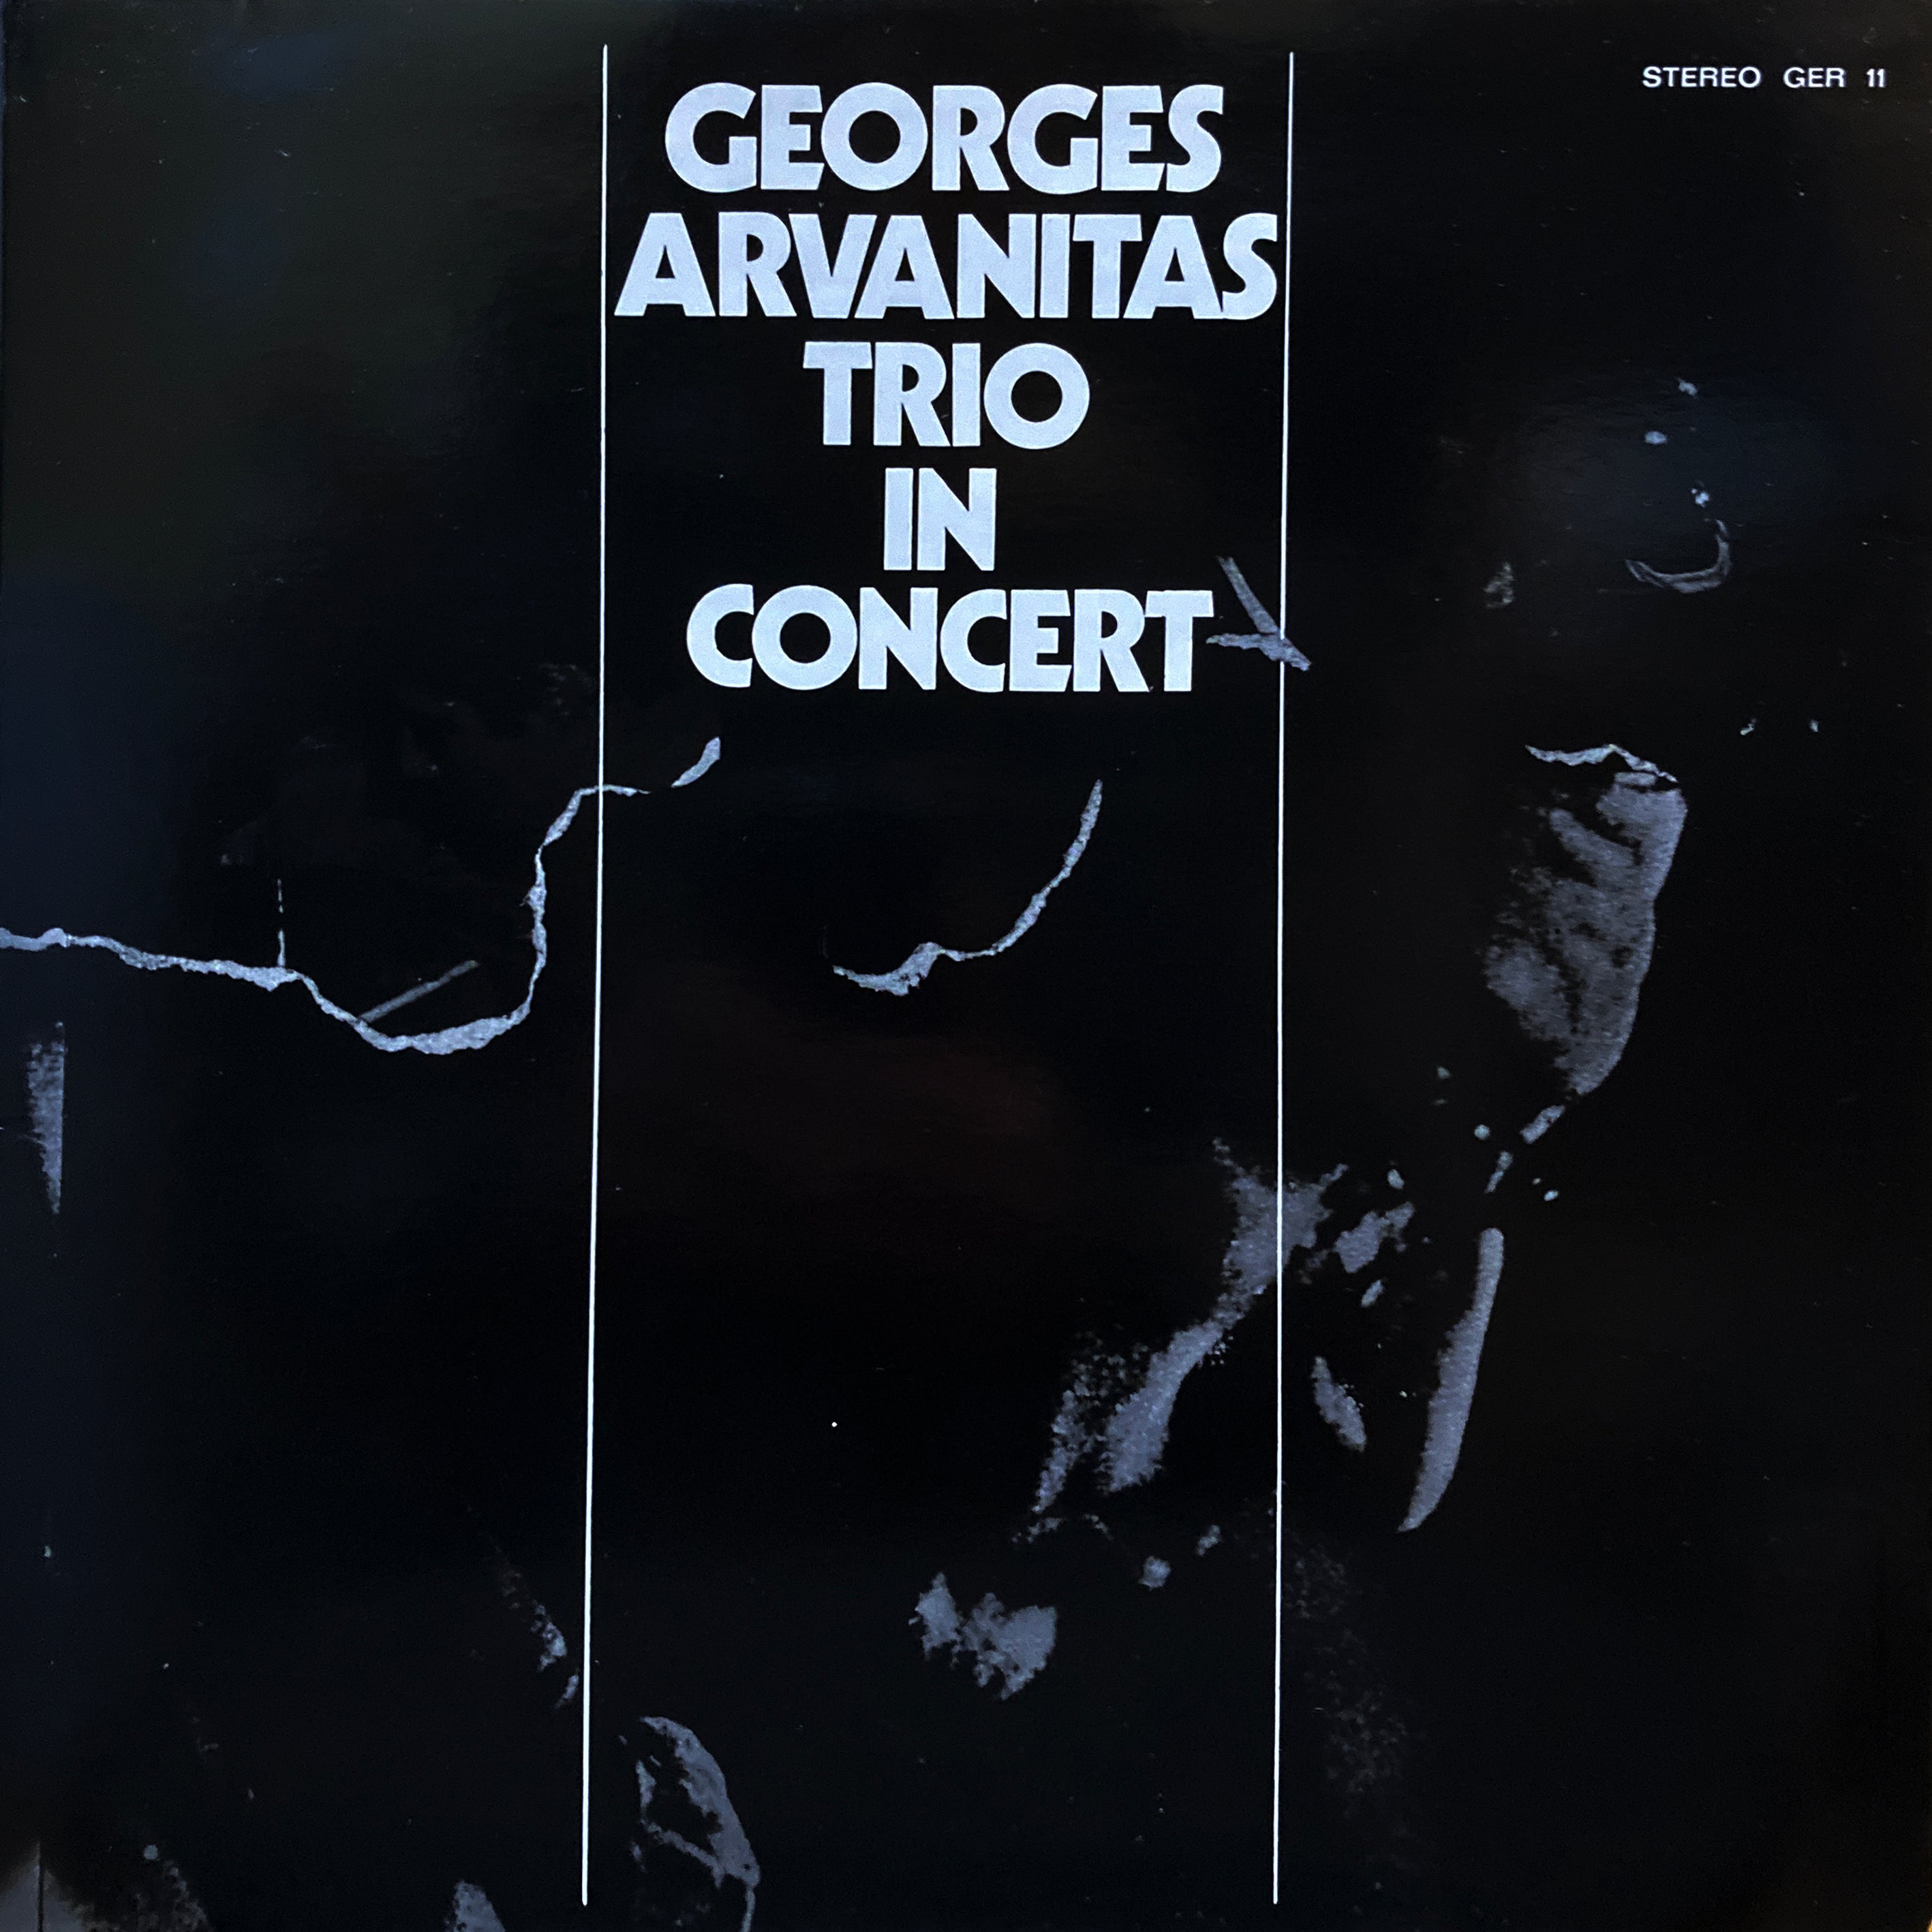 Georges Arvanitas Trio “In Concert”